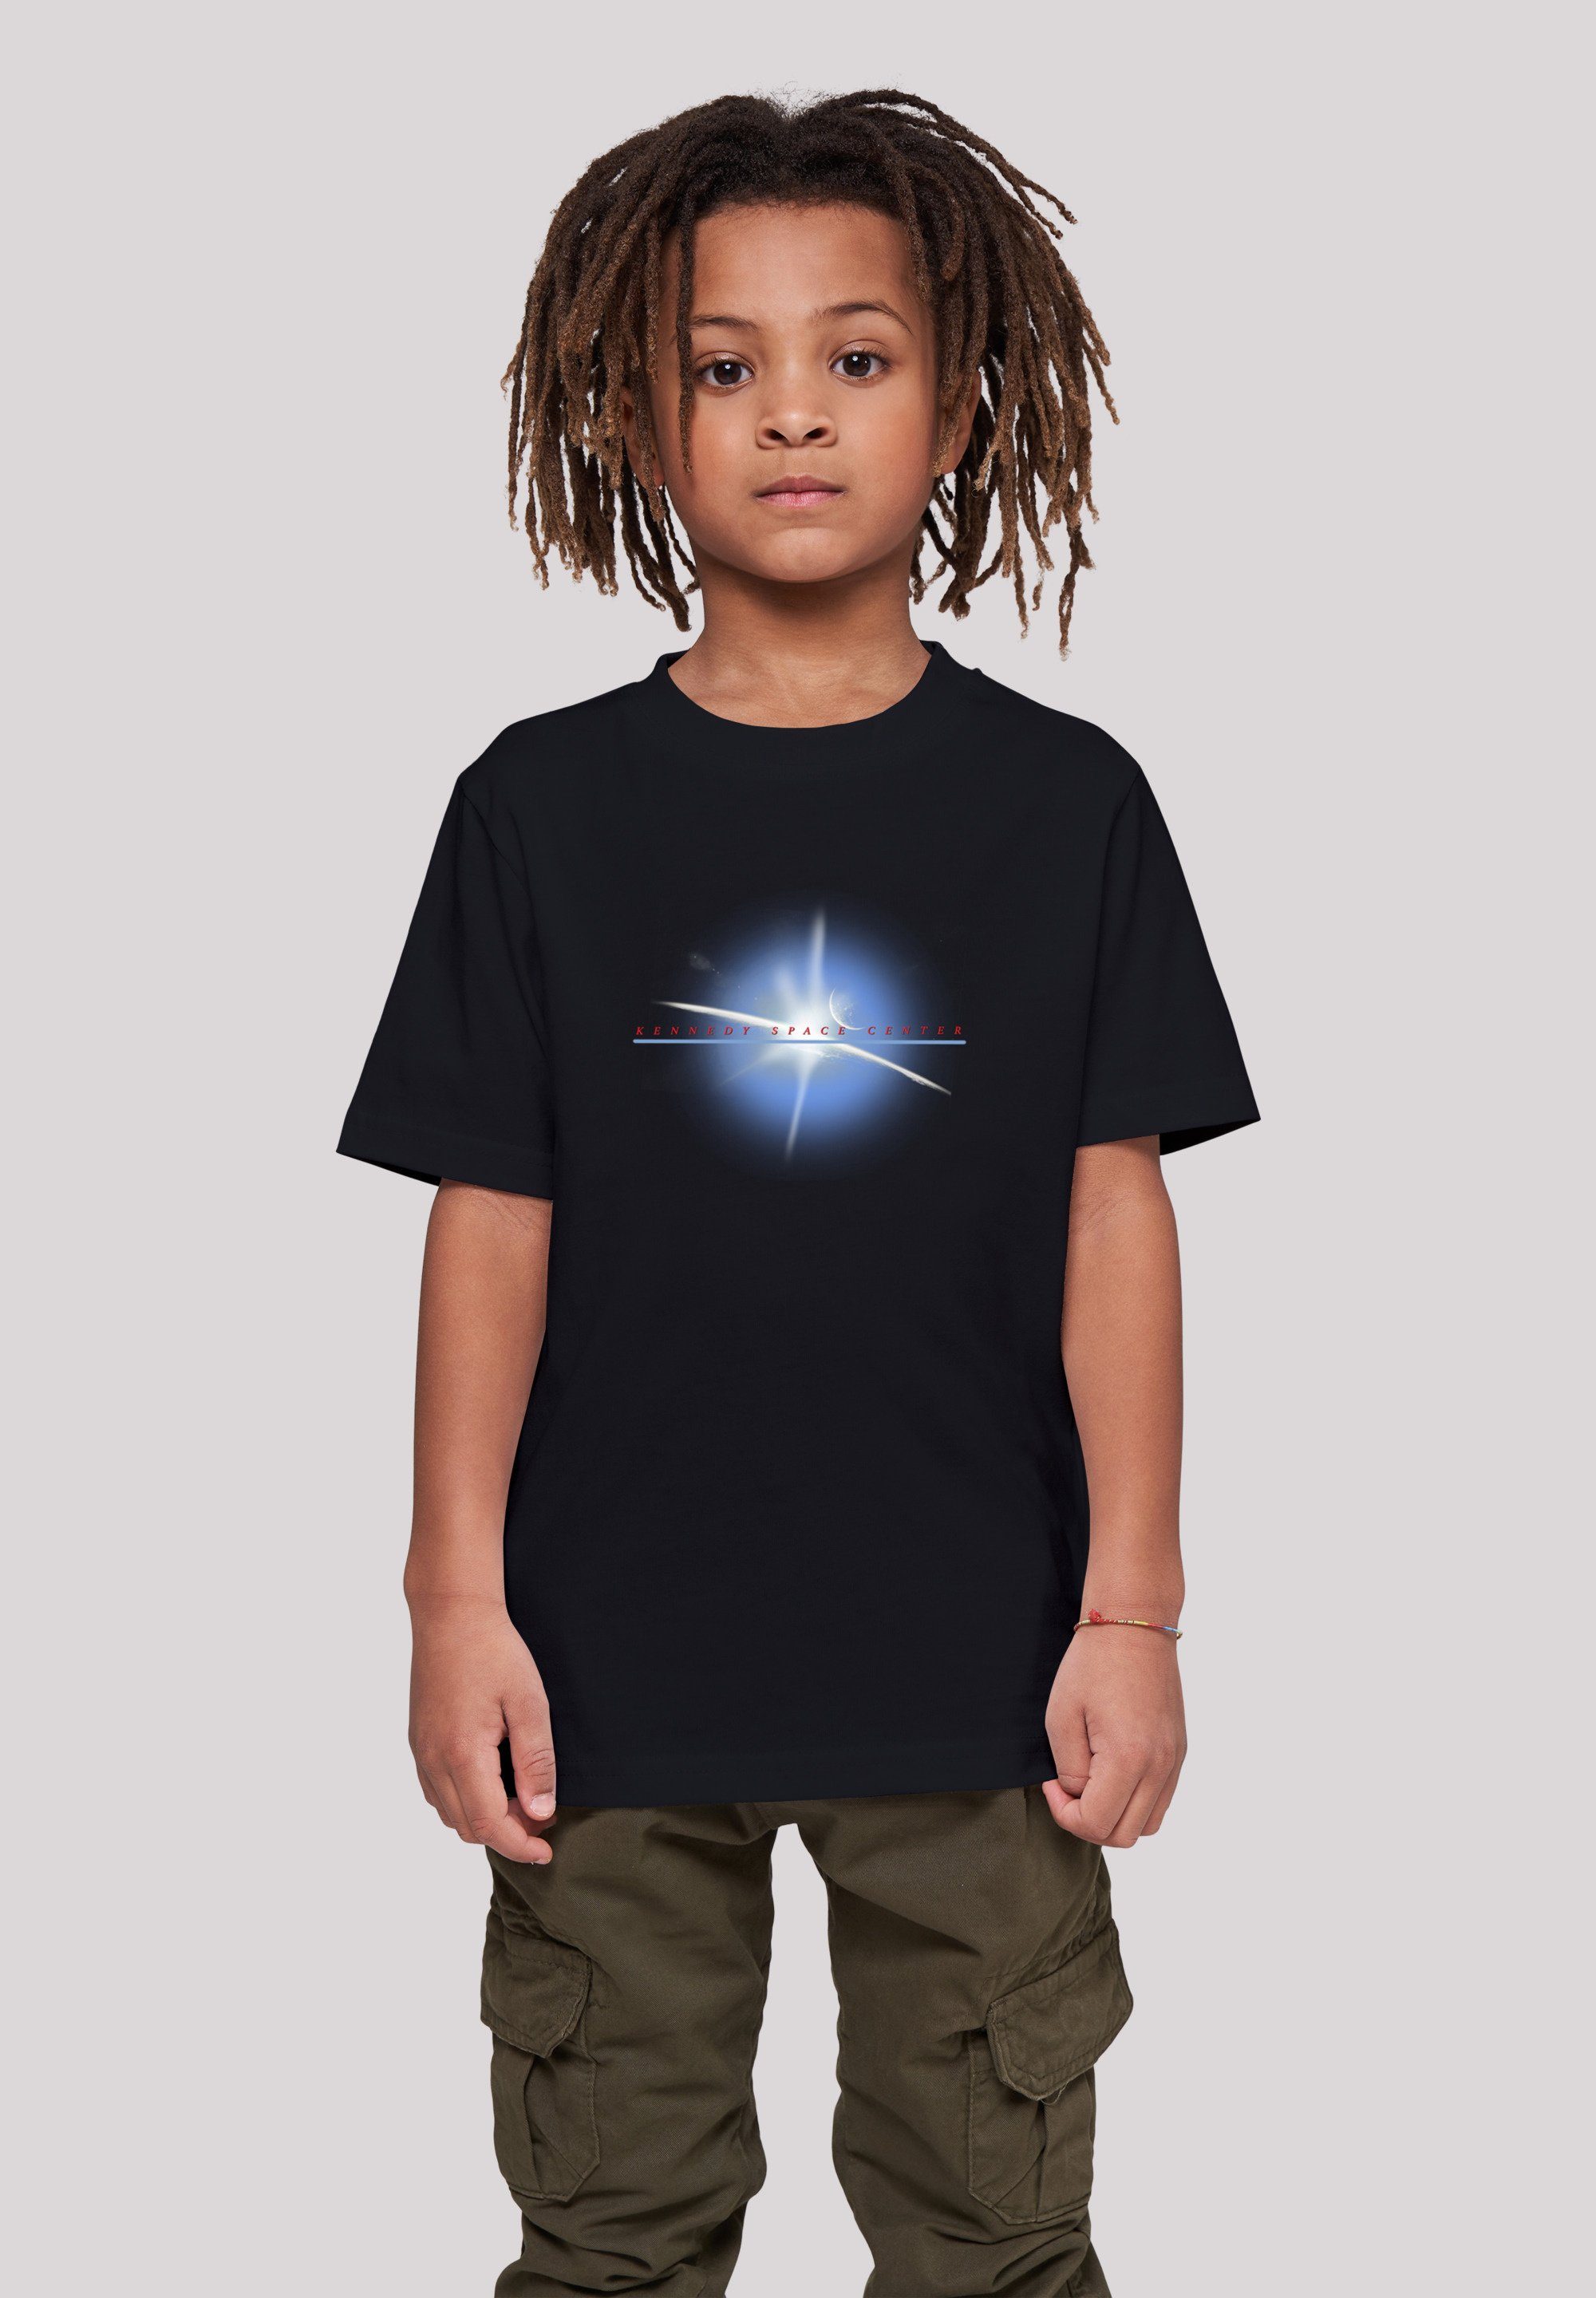 preispolitik F4NT4STIC T-Shirt NASA Kennedy Space Print Centre Planet schwarz